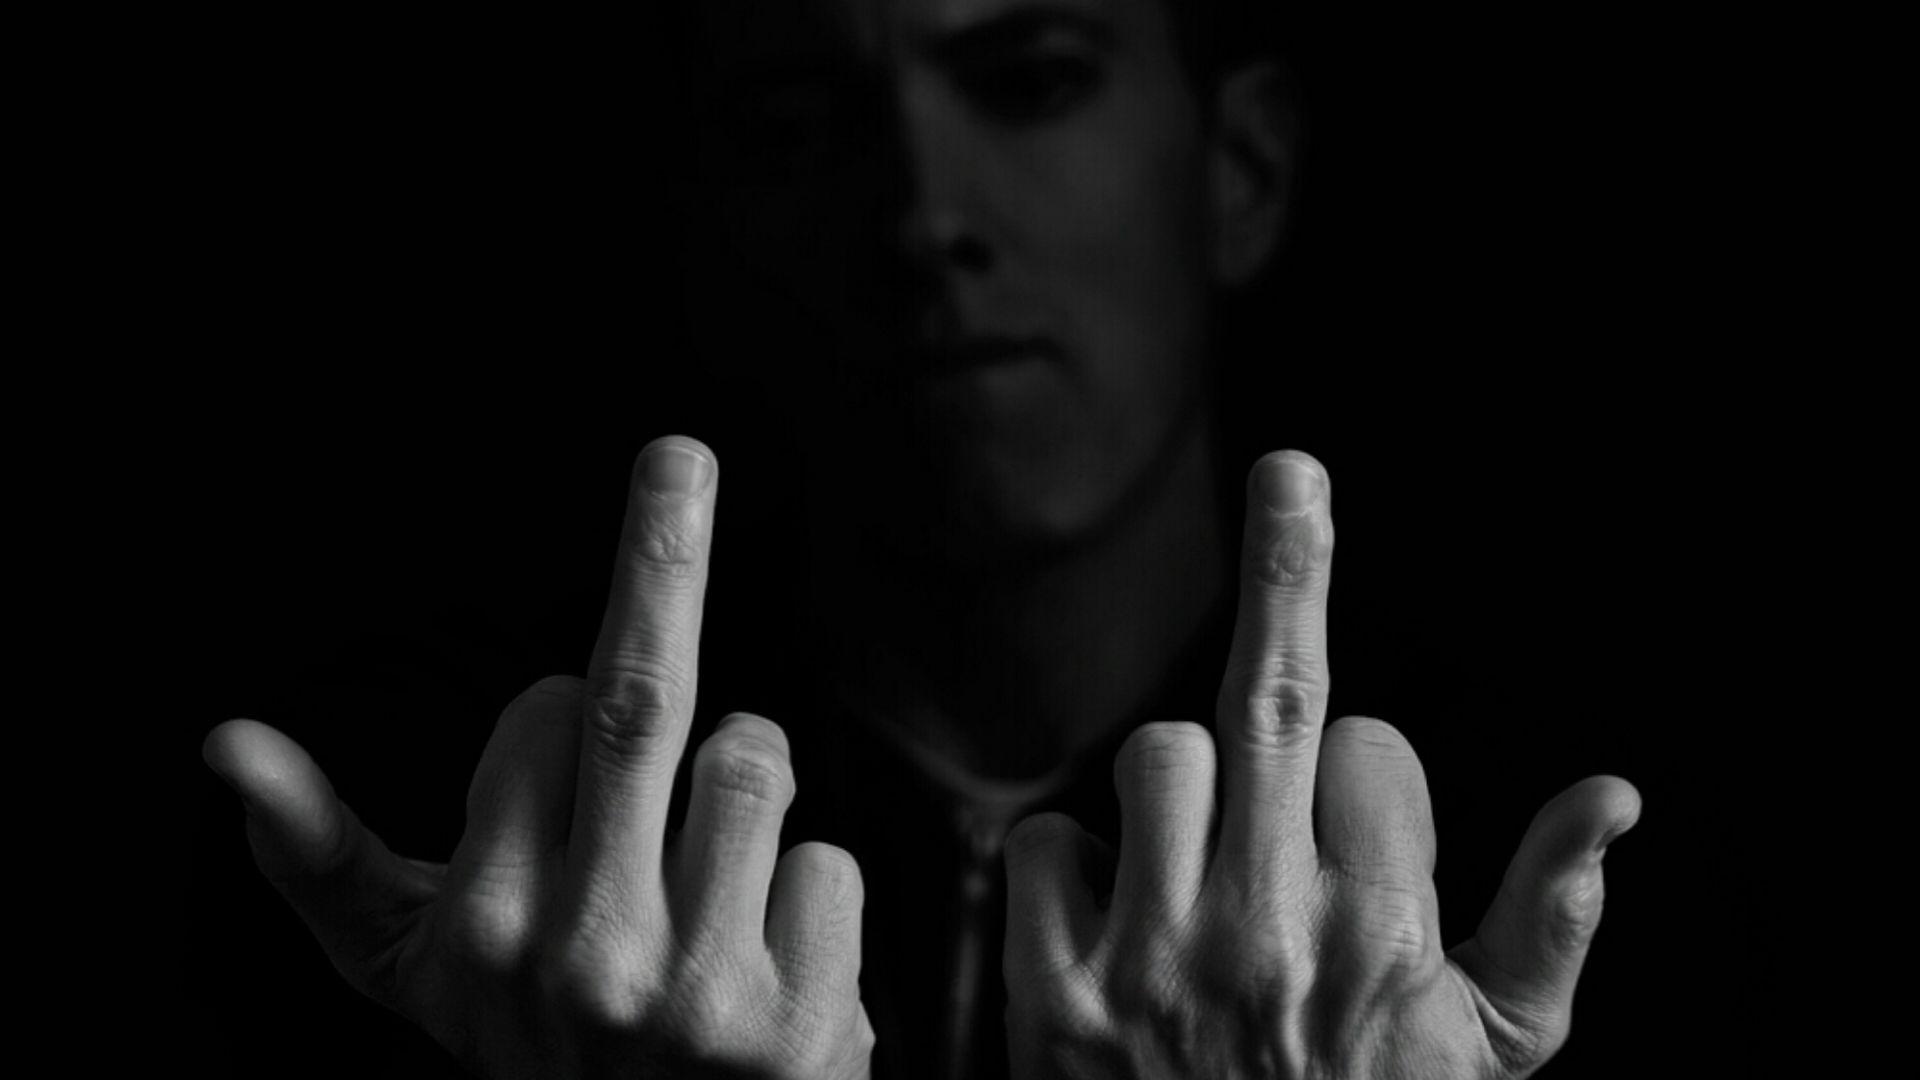 Eminem Photo Wallpaper HD Wallpaper